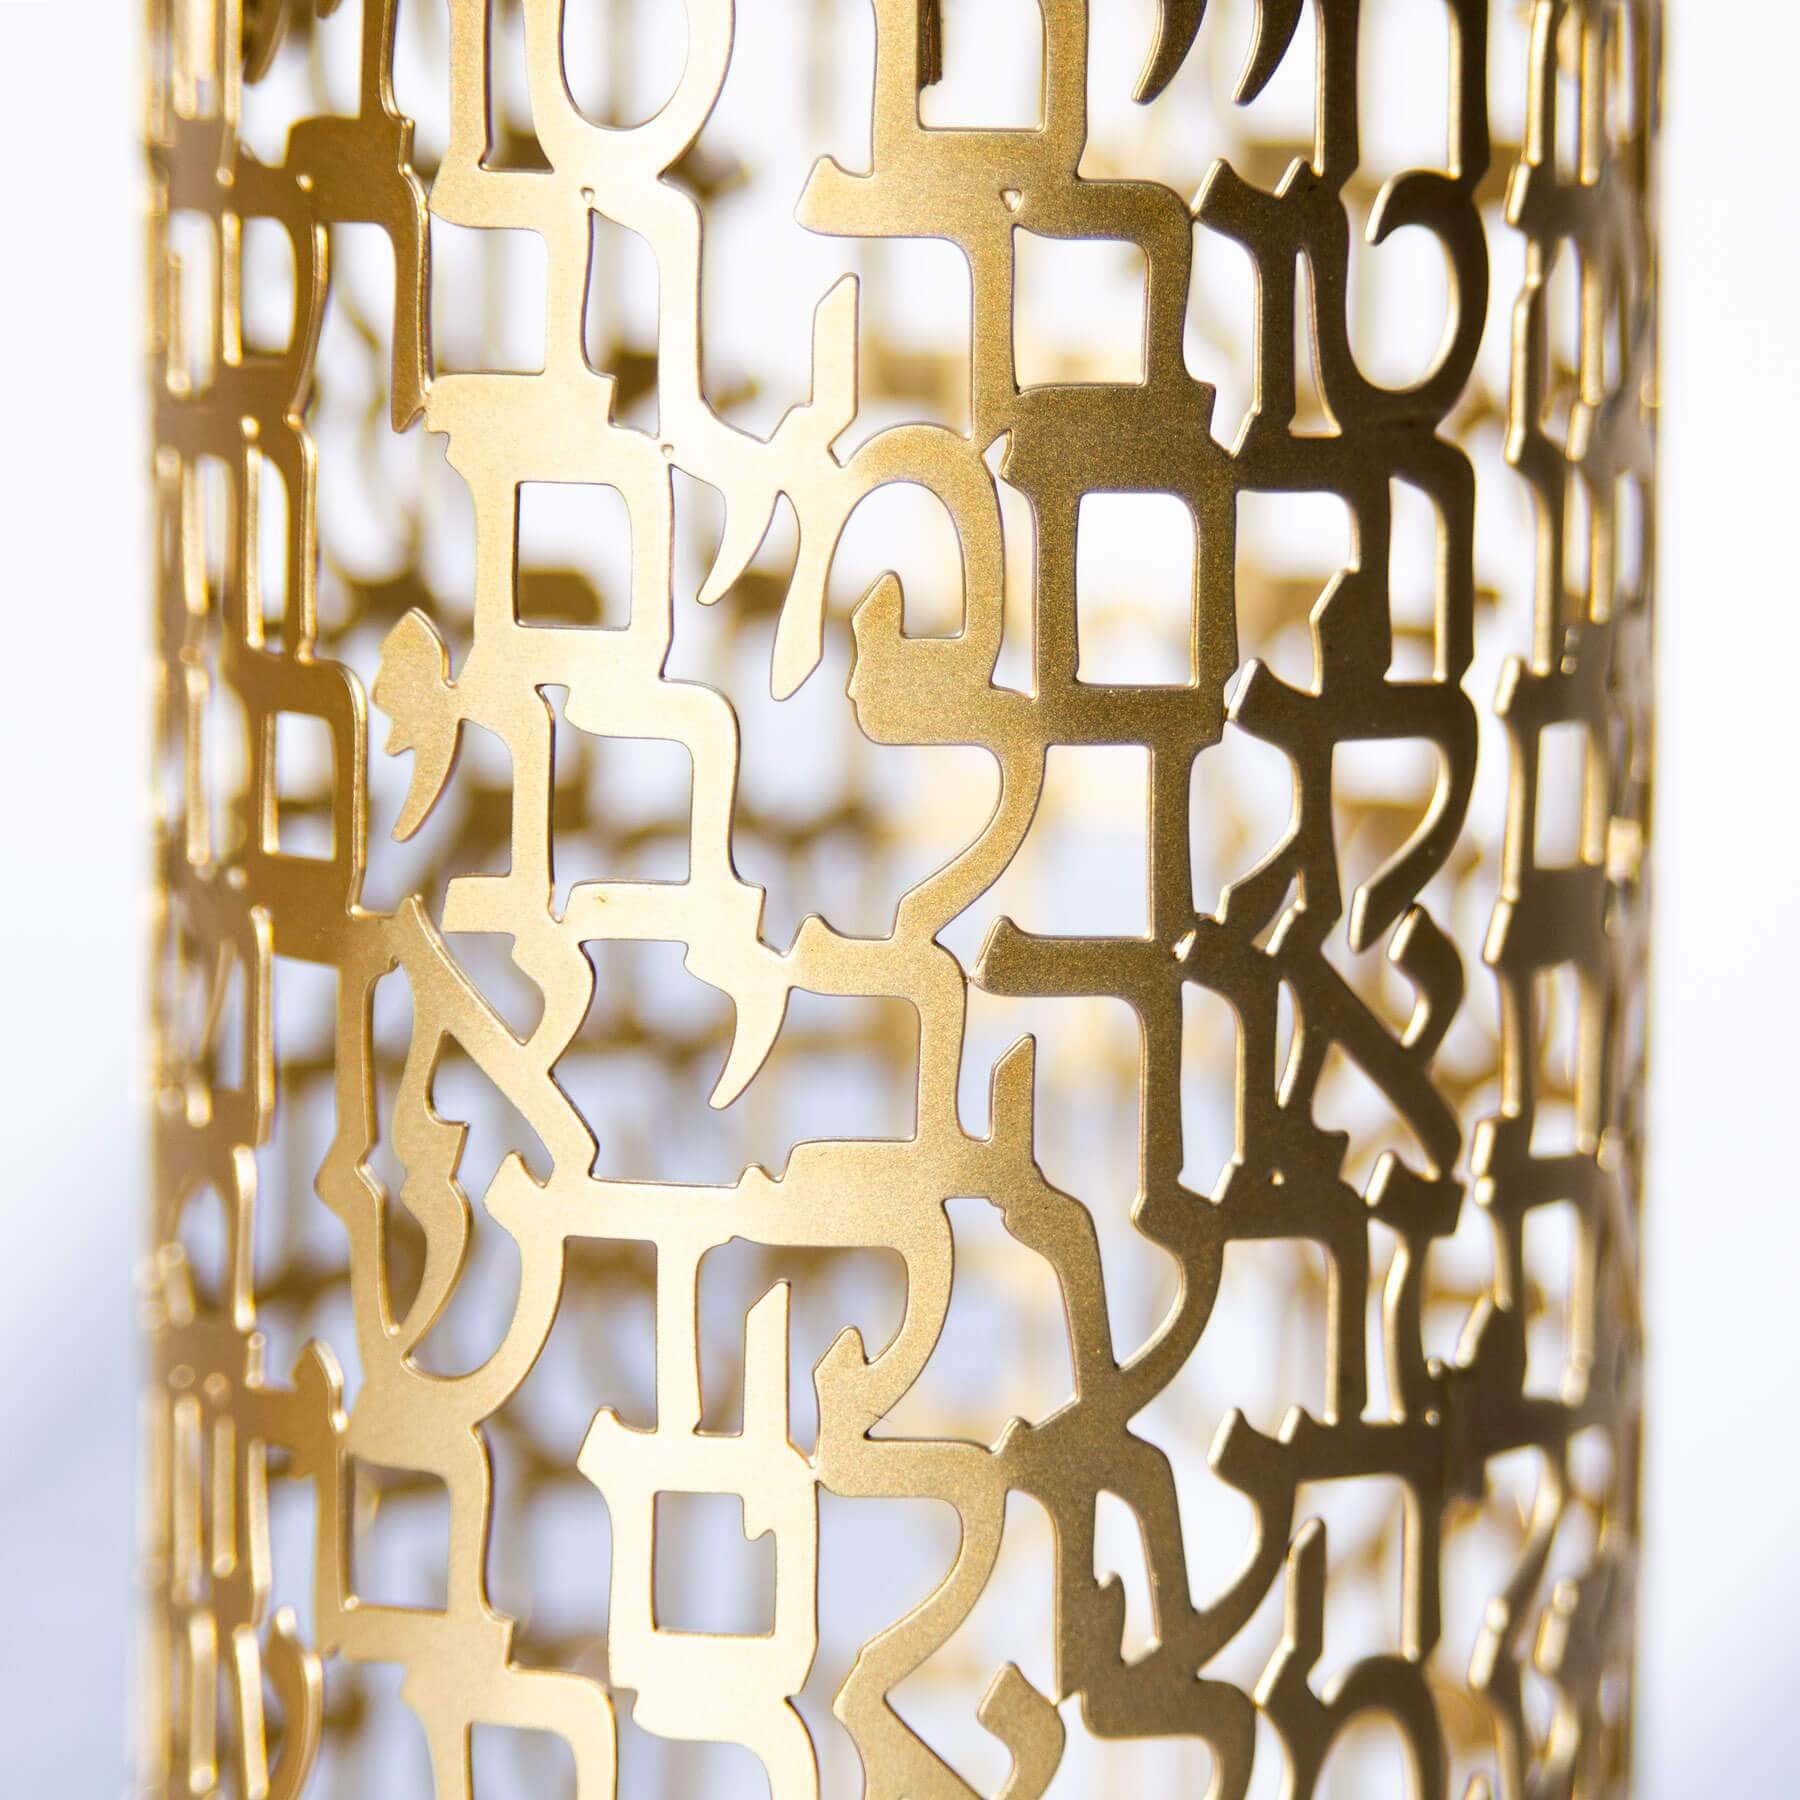 Hoshen Designs Candlesticks Shabbat Blessing Candleholders - Gold